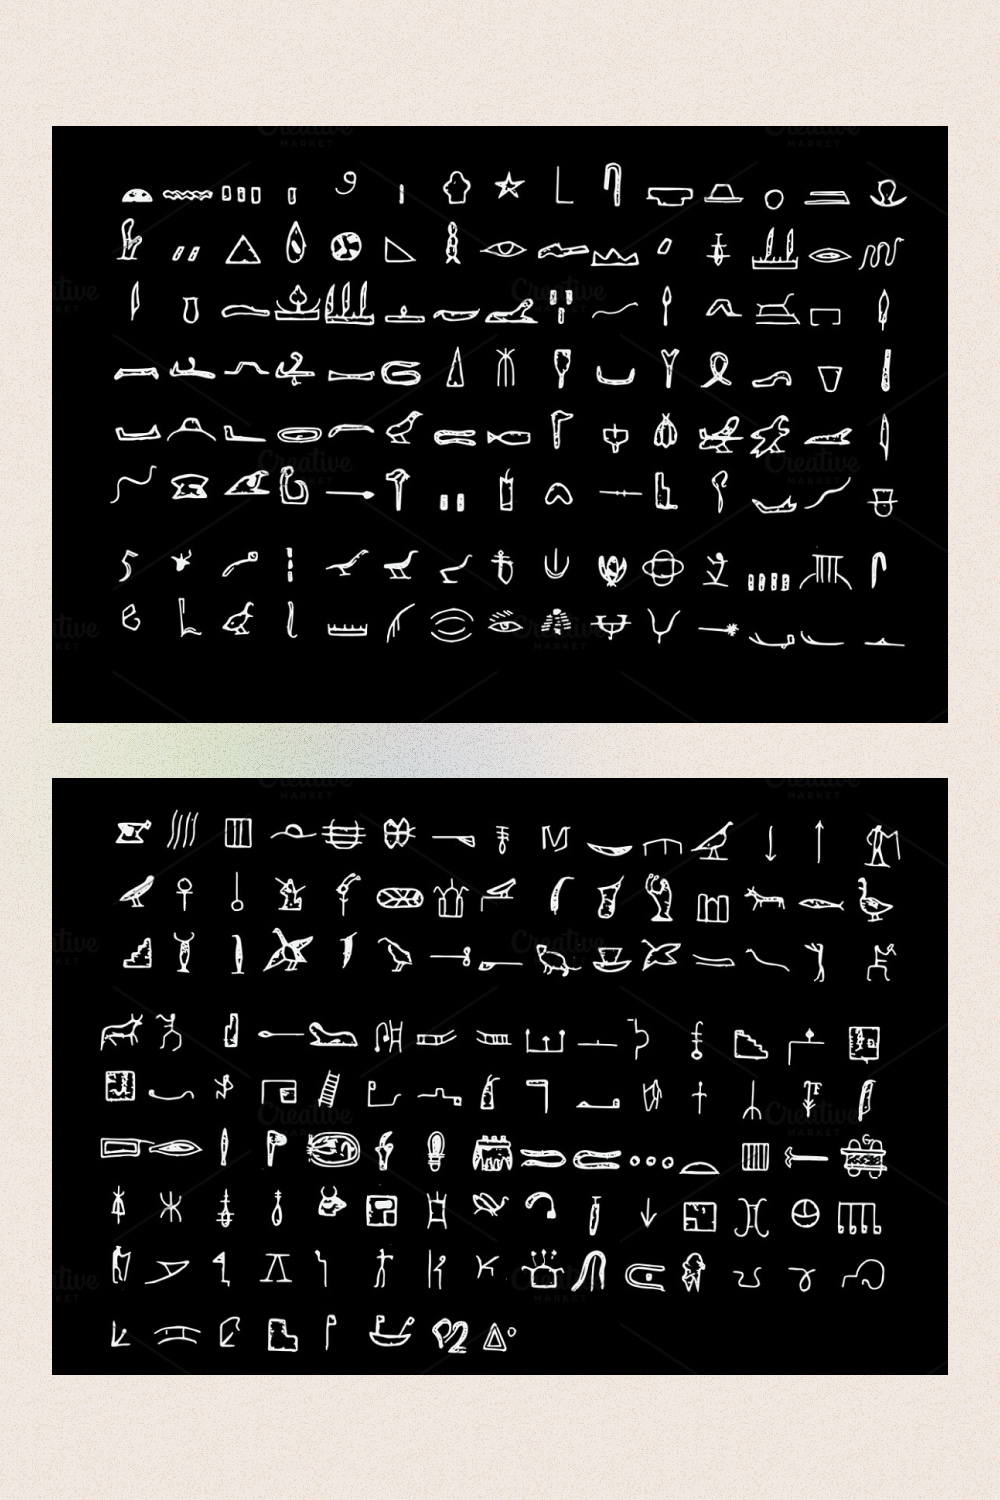 Beautiful Egyptian symbols.